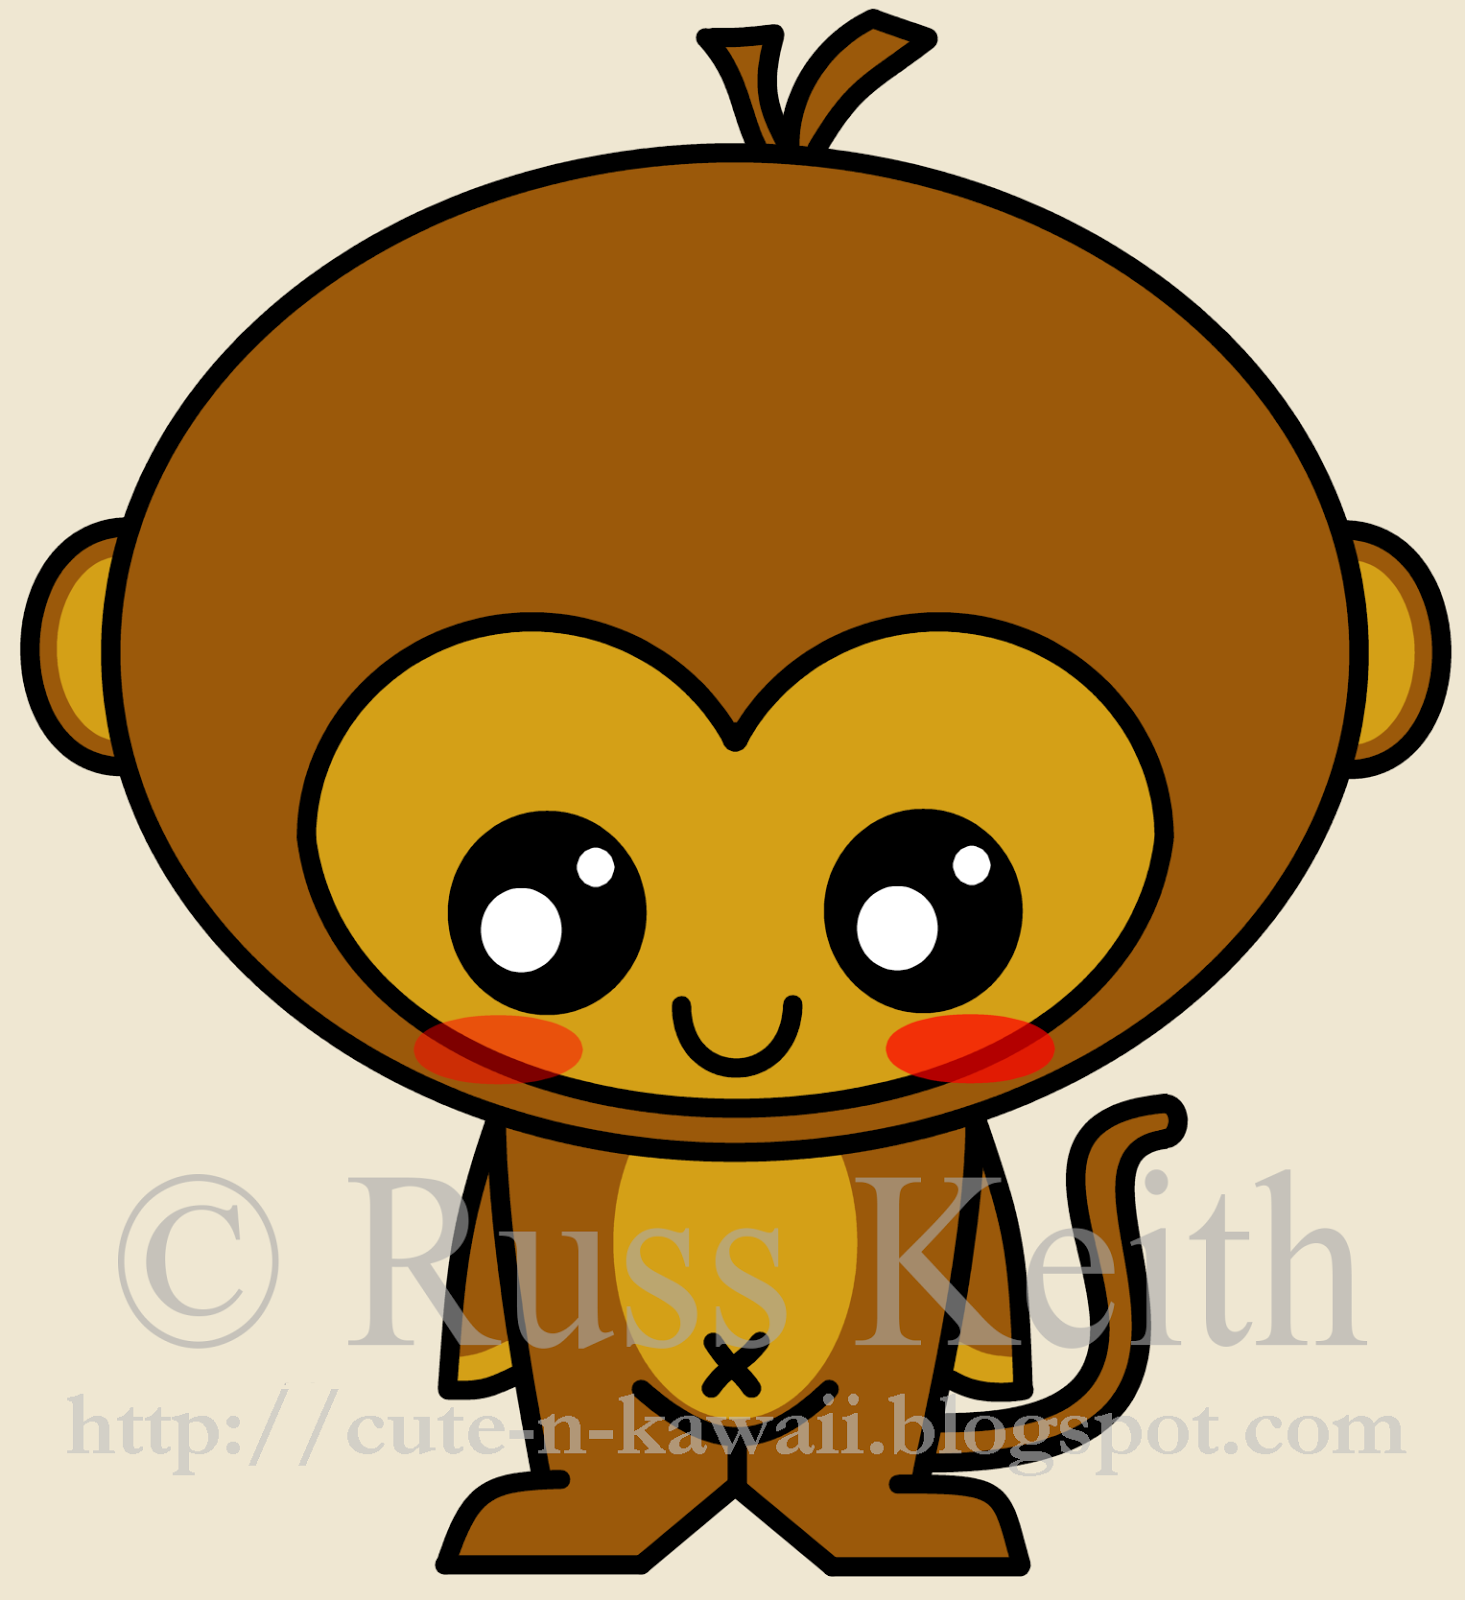 Cute N Kawaii: How To Draw A Kawaii Monkey